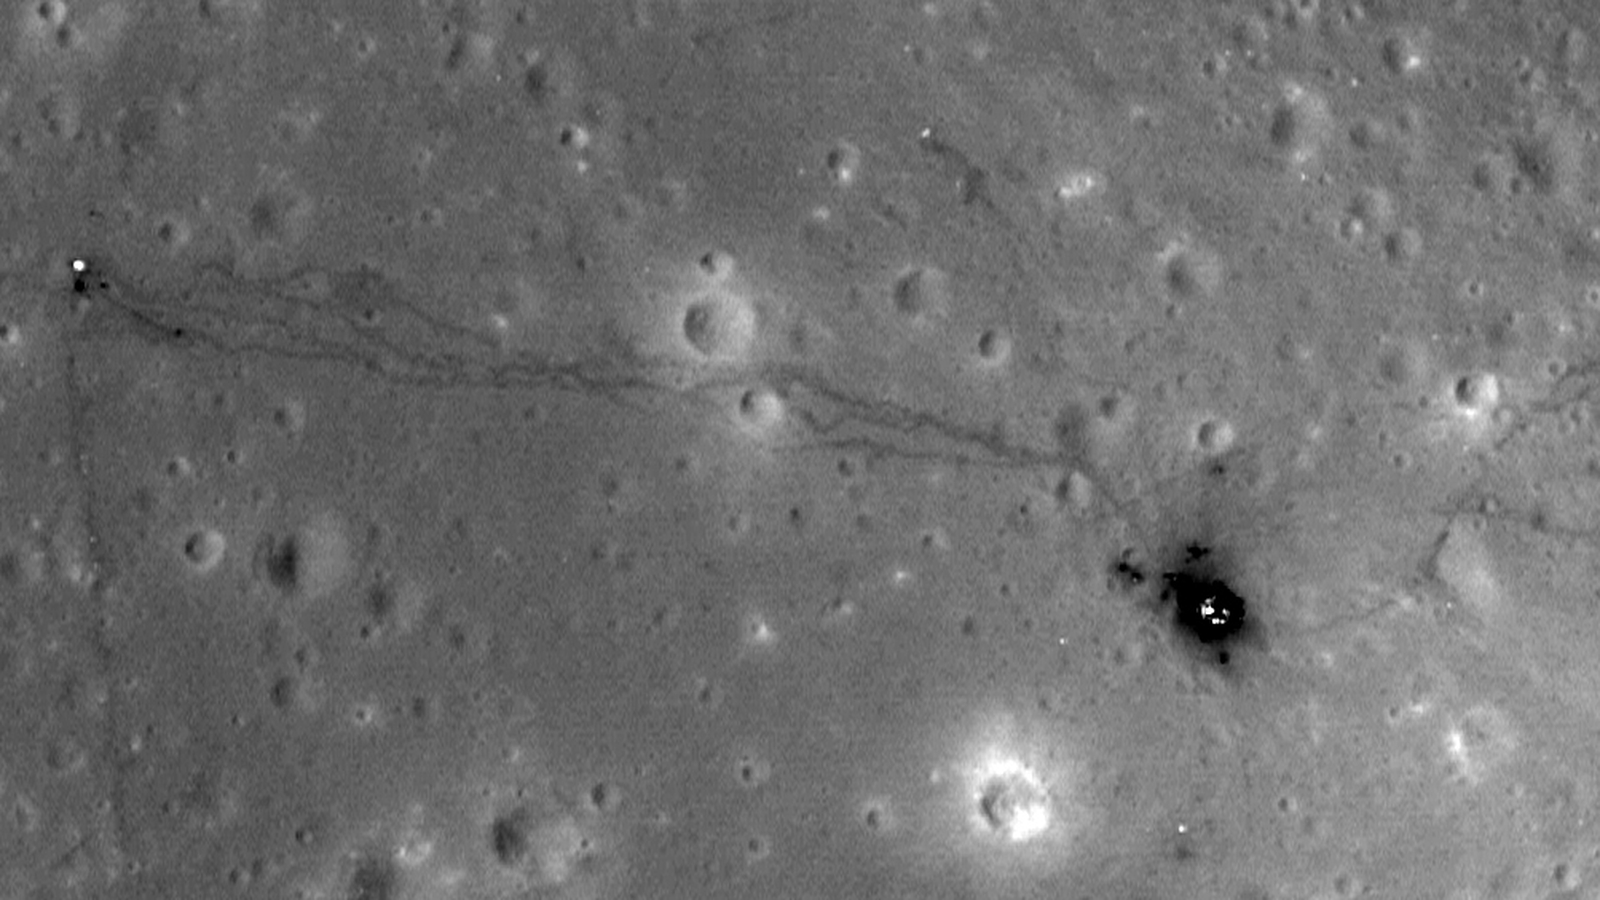 lunar reconnaissance orbiter photos of apollo landing sites